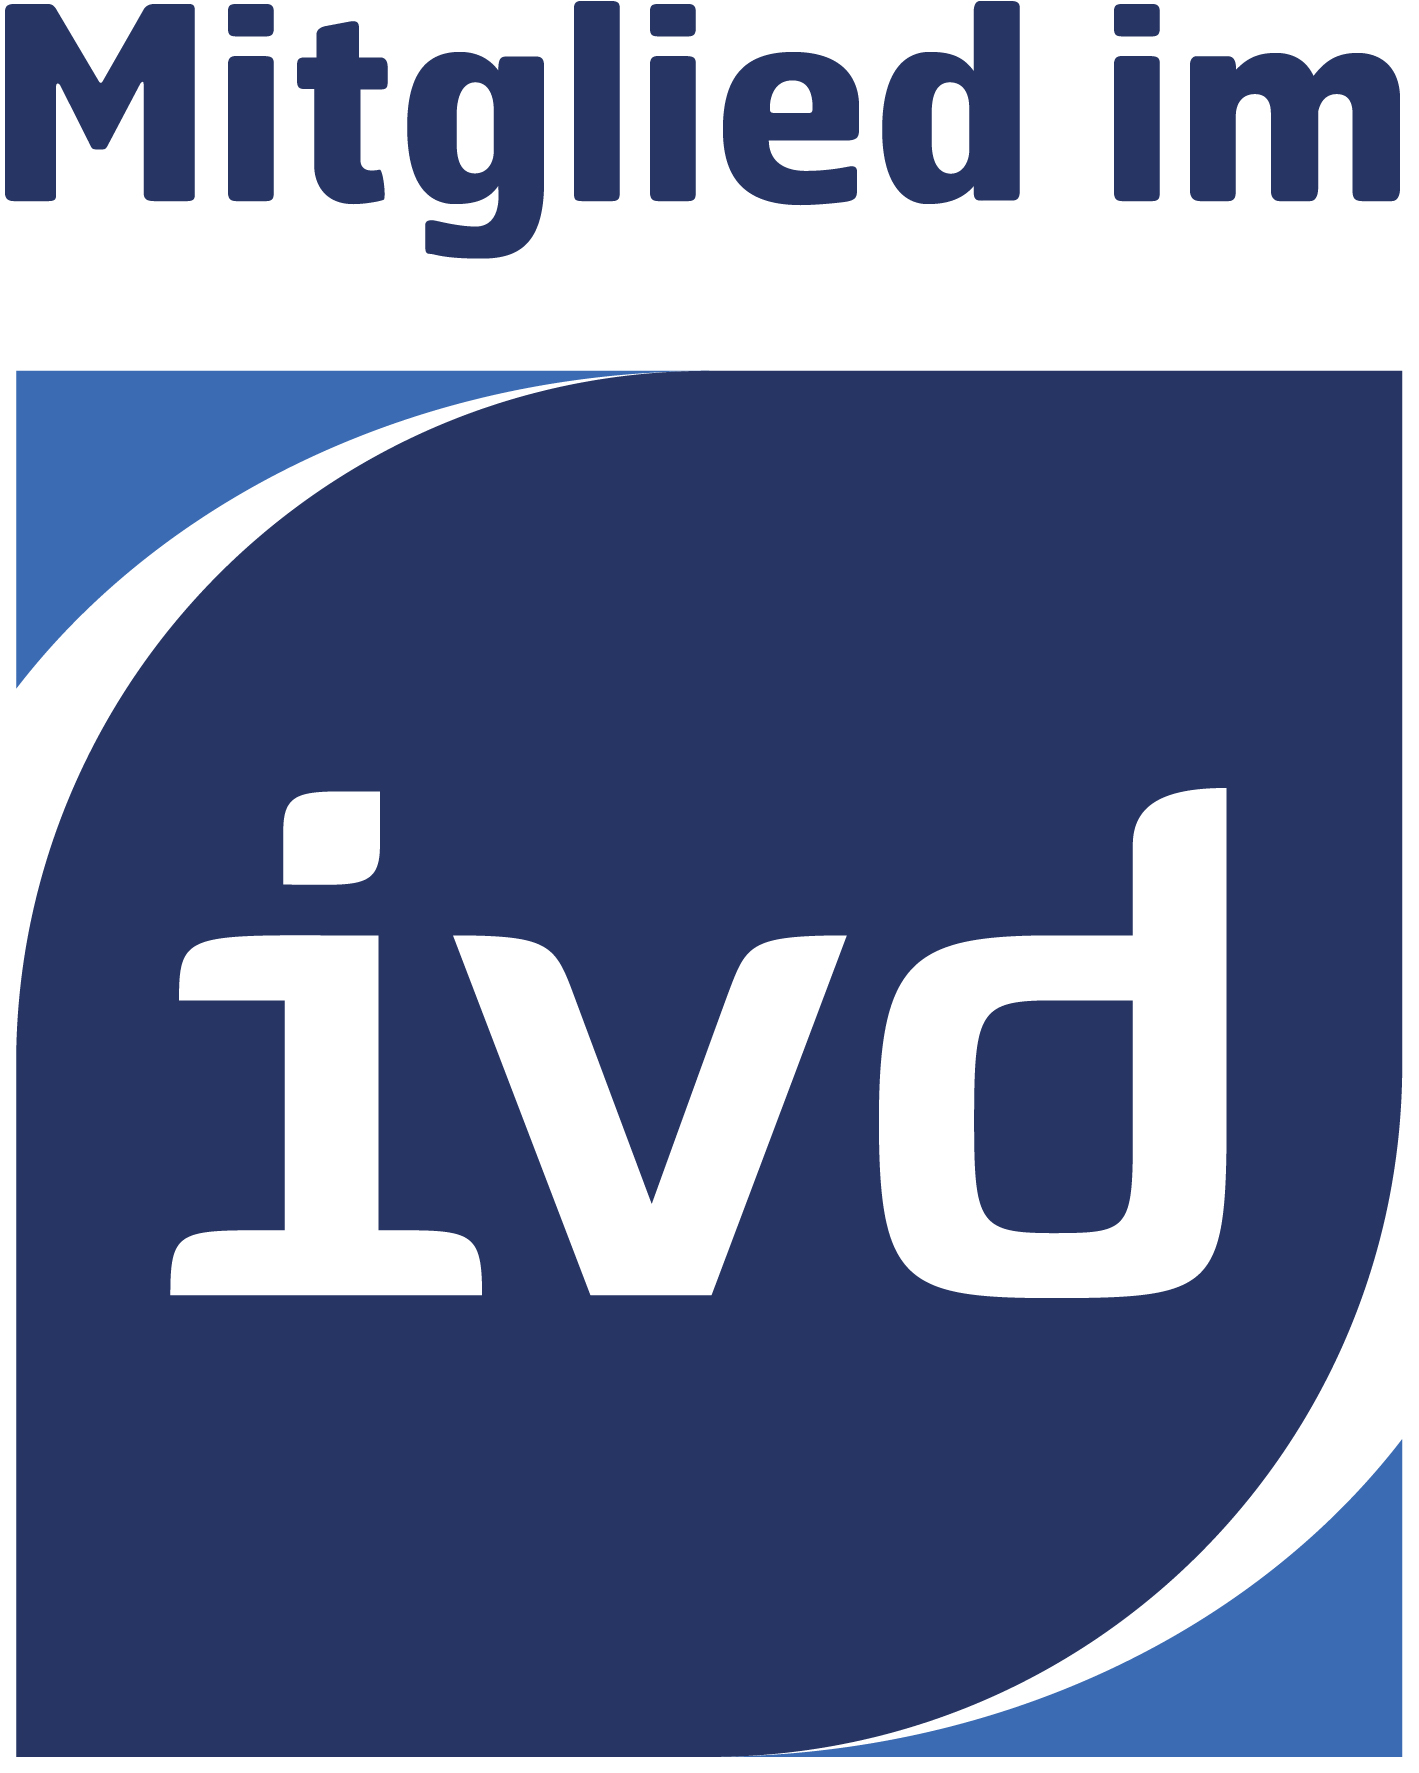 IVD_Mitgliedim_Logo_RGB